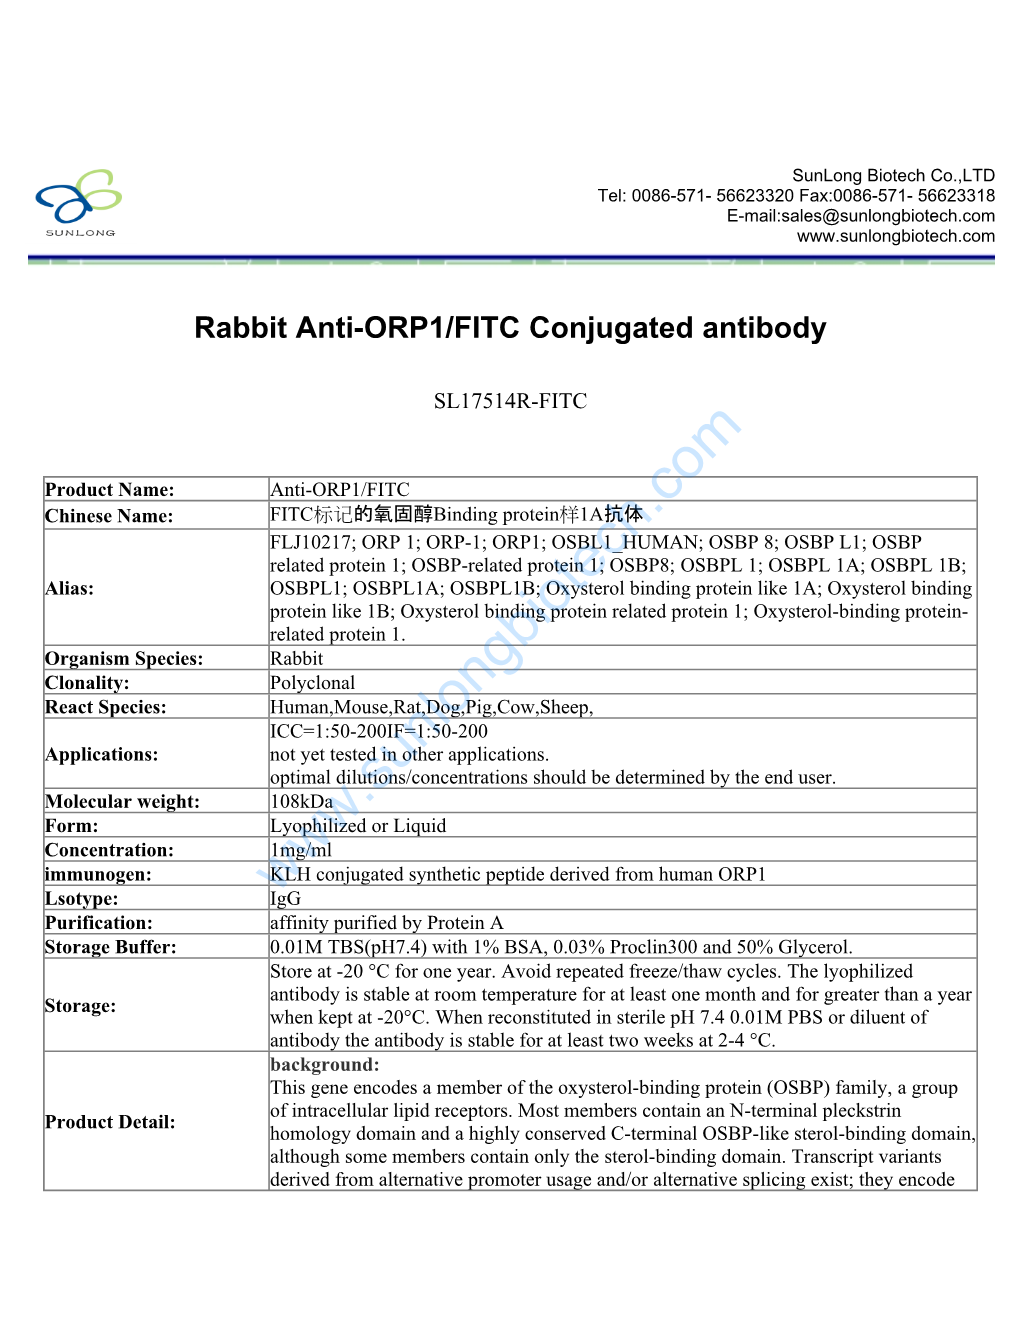 Rabbit Anti-ORP1/FITC Conjugated Antibody